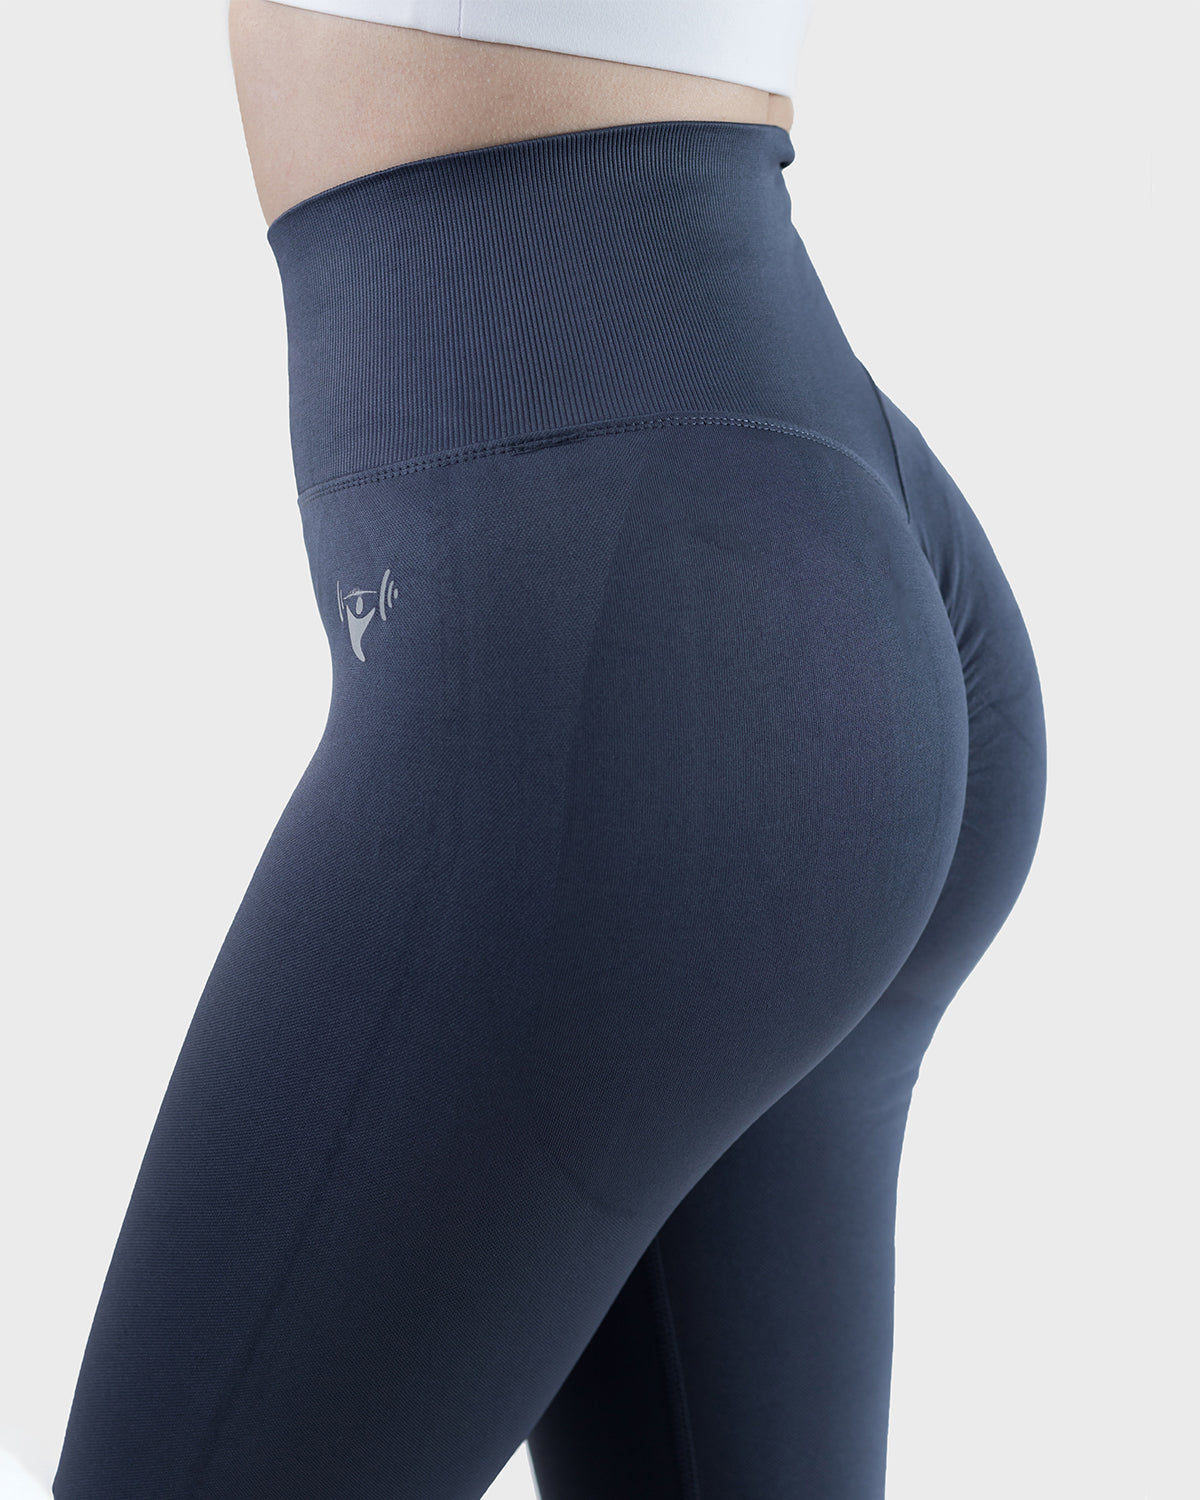 Ombre Flex Scrunch Shorts - Grey